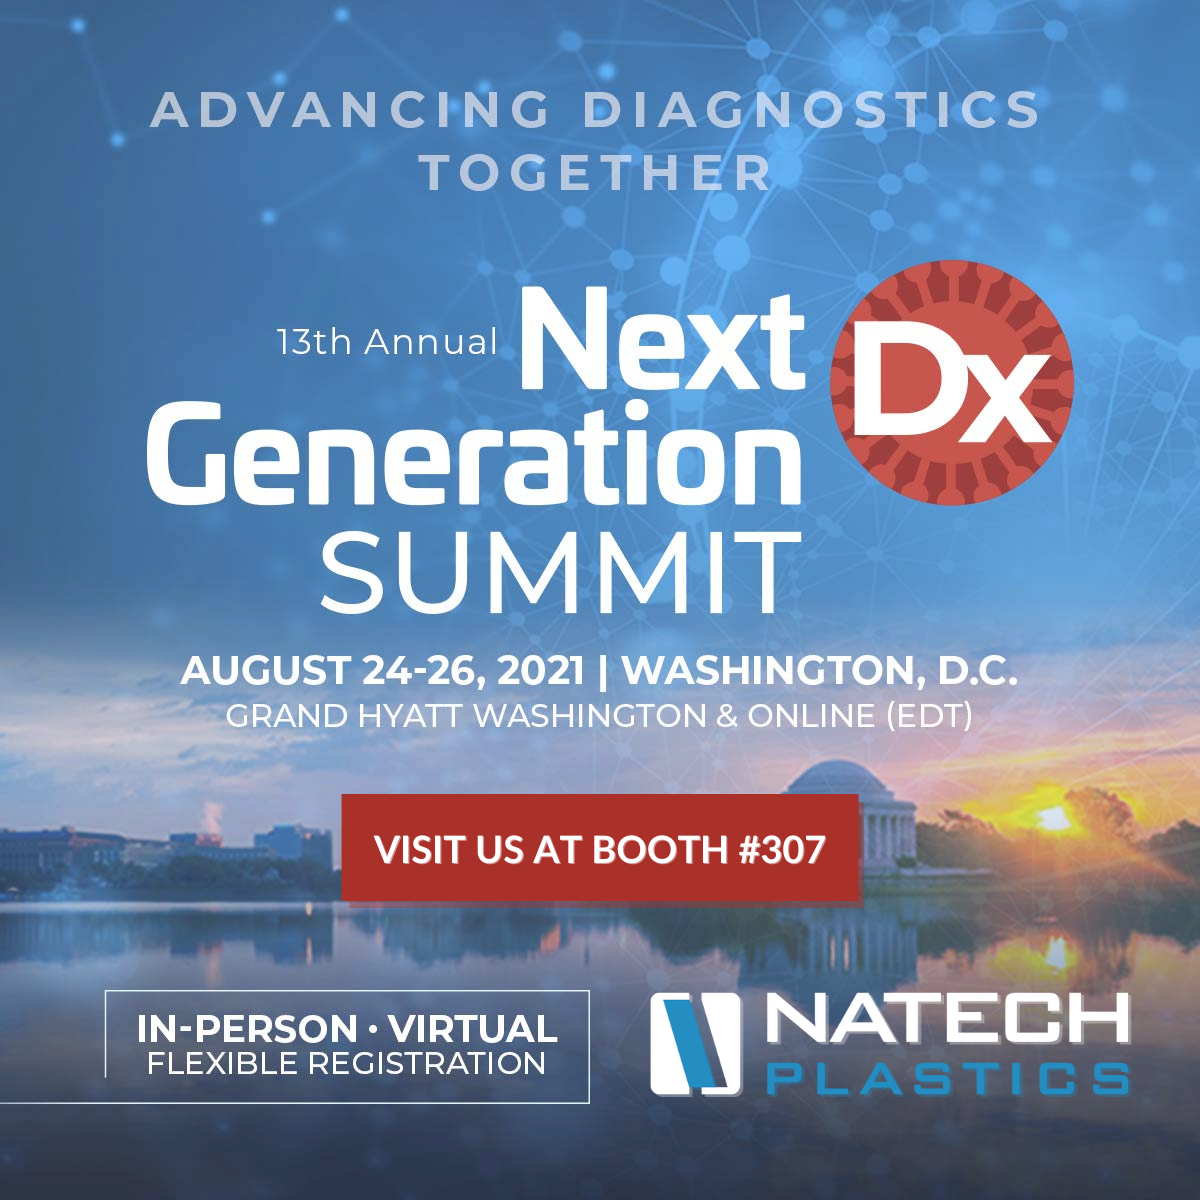 Visit Natech Plastics at Next Generation Dx Summit 2021 in Washington, D.C.